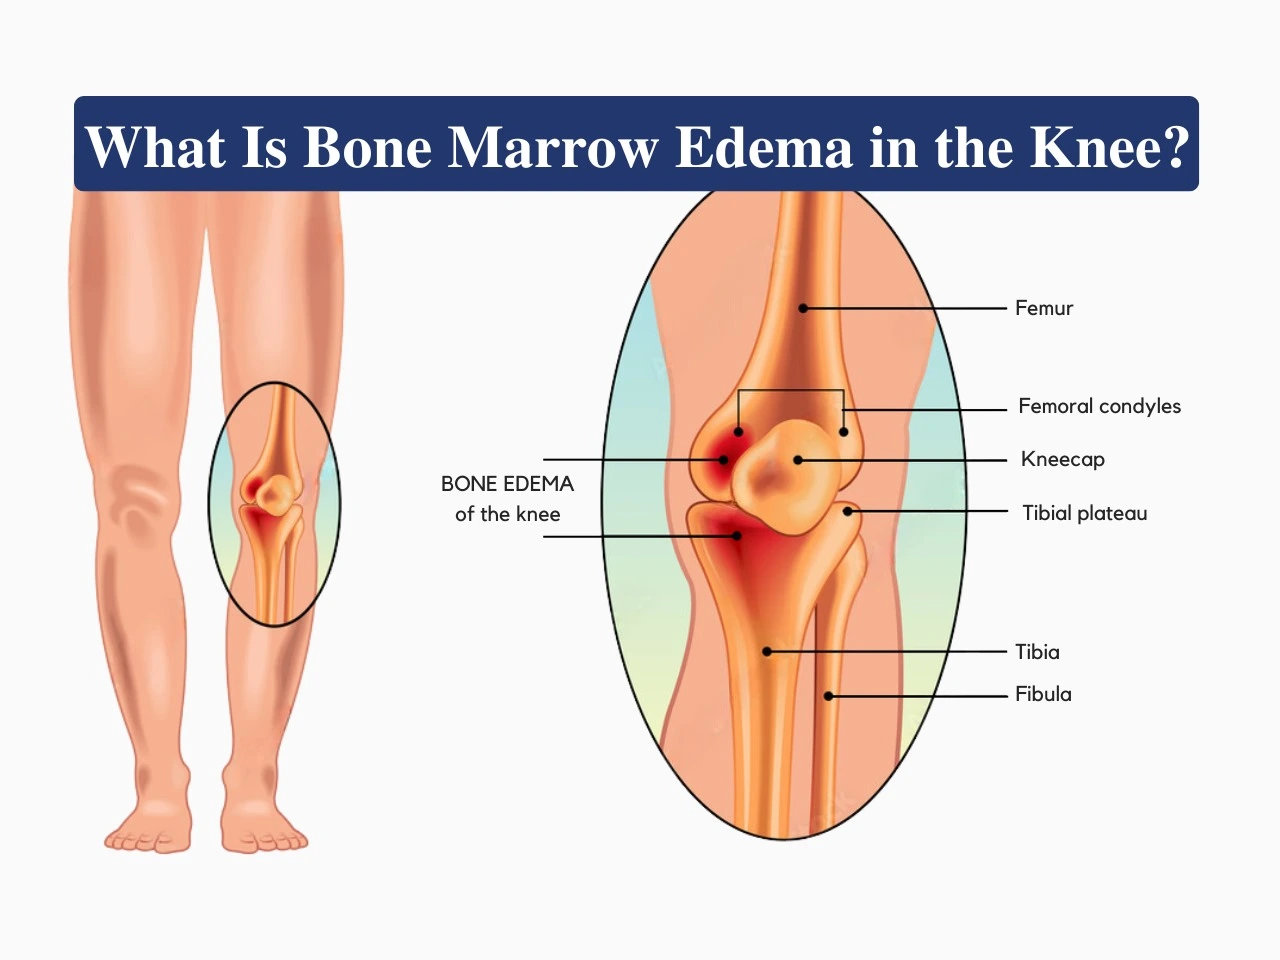 What is Bone Marrow Edema in the Knee